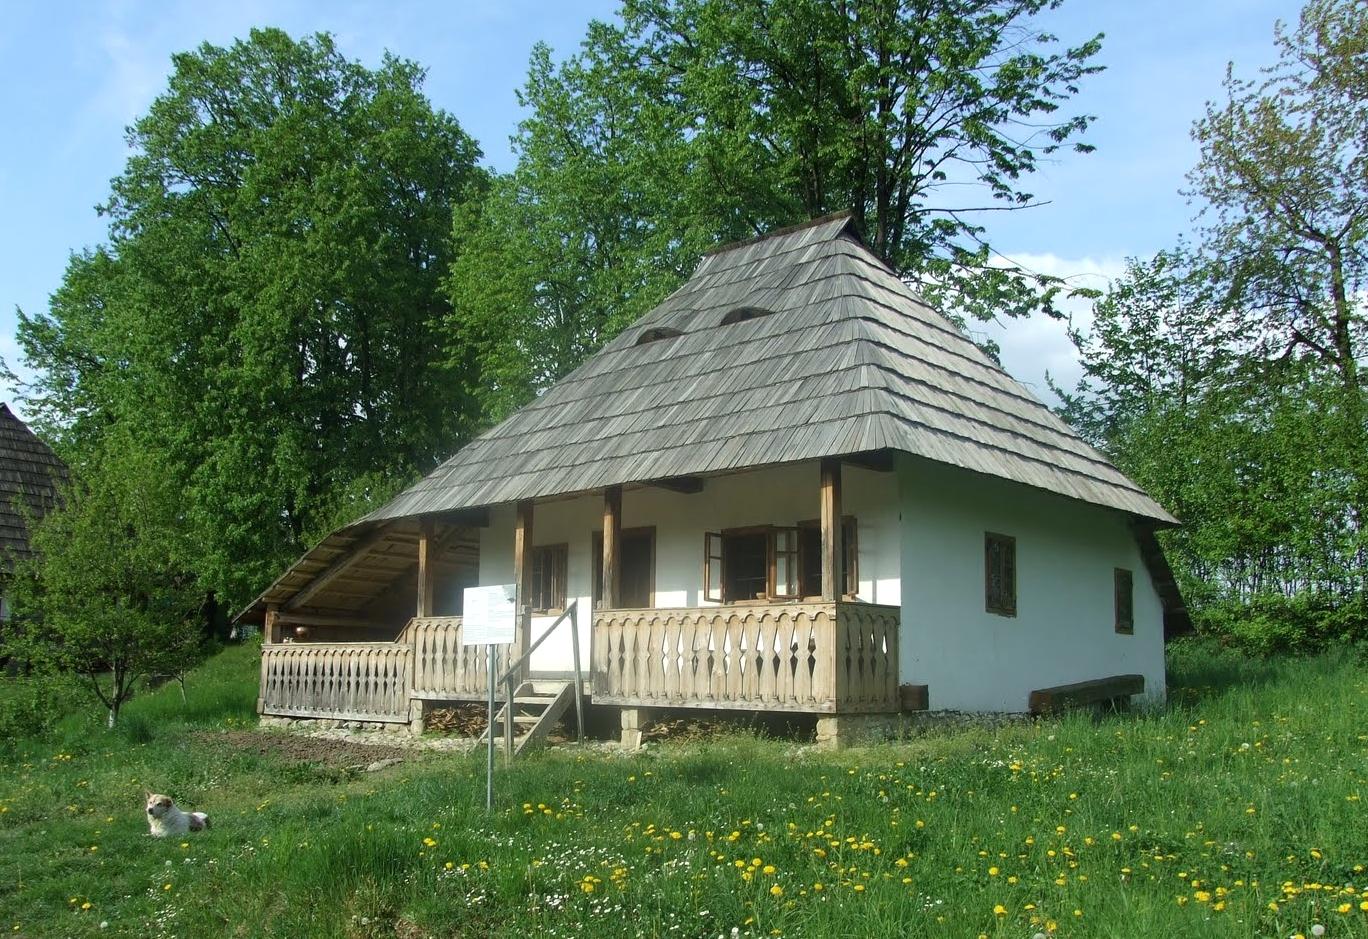  traditional houses Romania Dacia